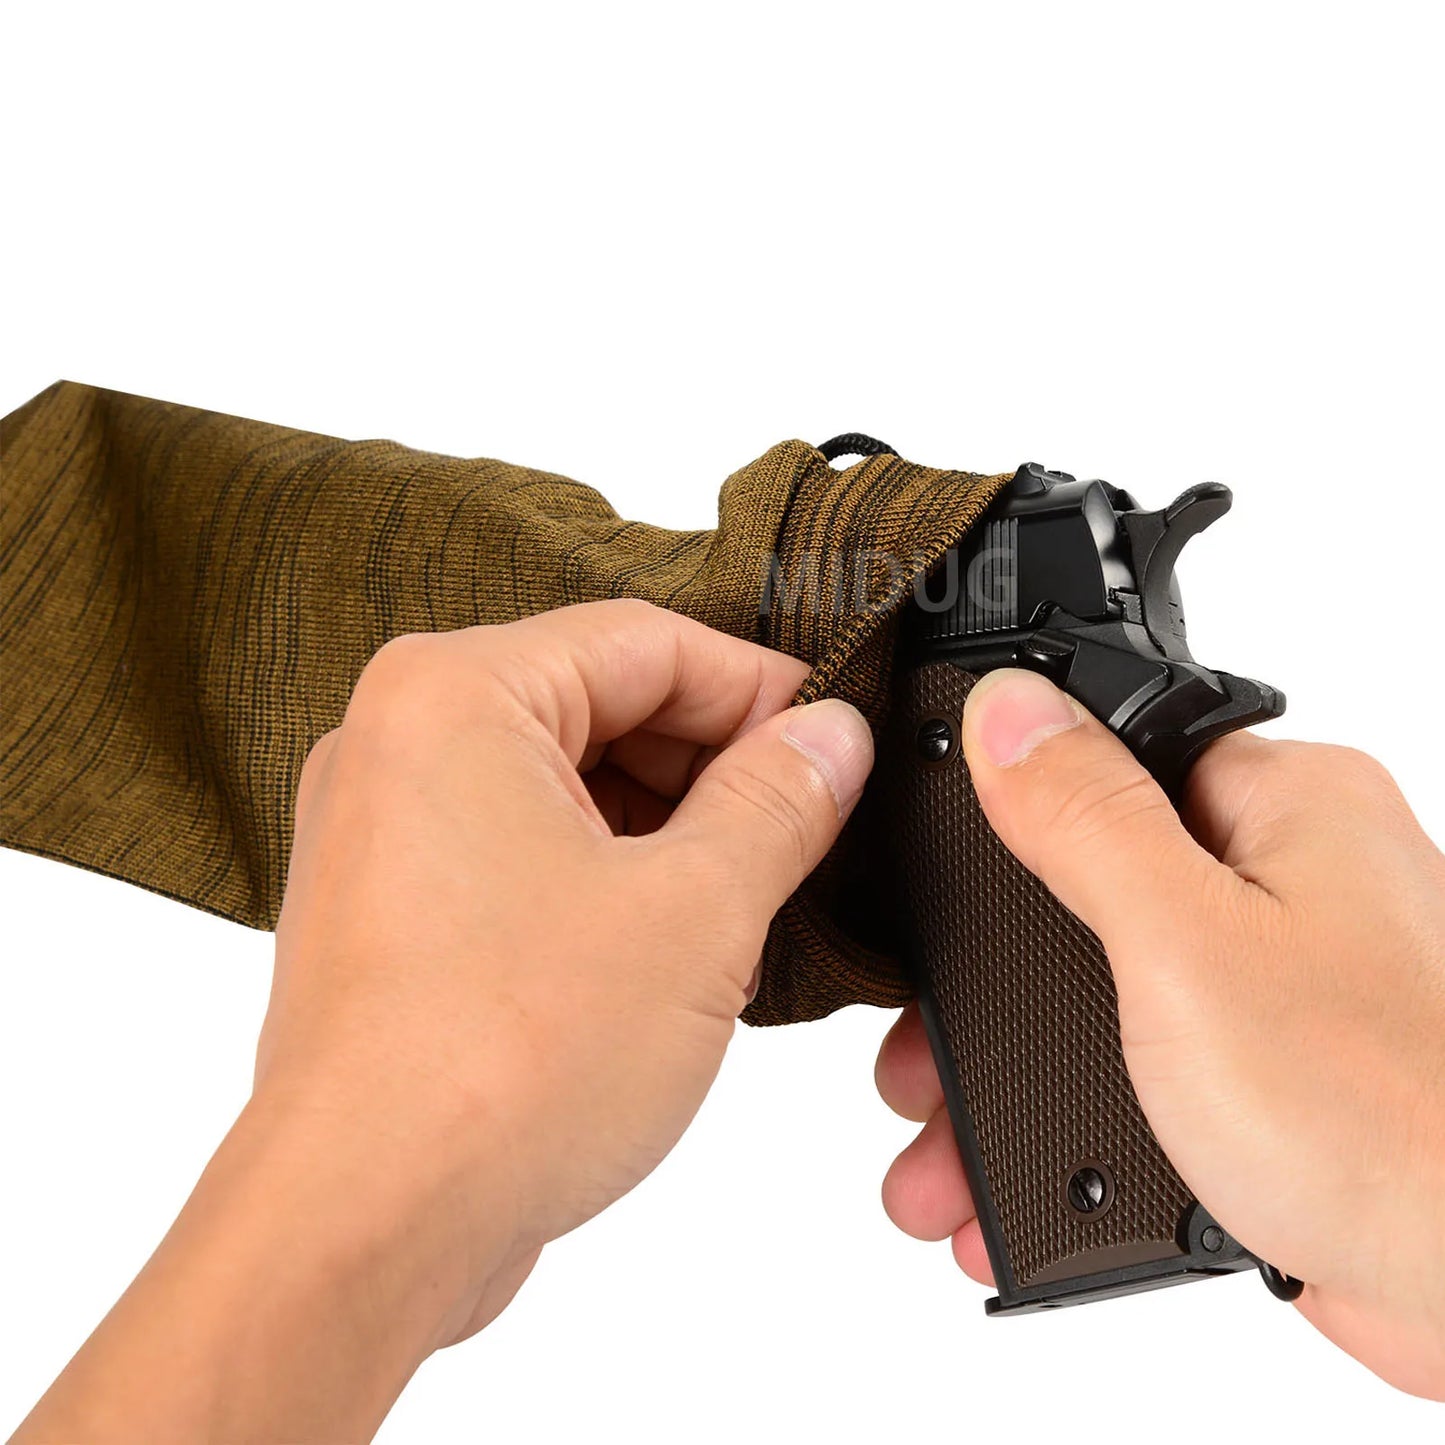 16" X 4.3" 5 Pack Gun Socks Sleeve Silicone Protection for Pistol/Handgun/Revolver